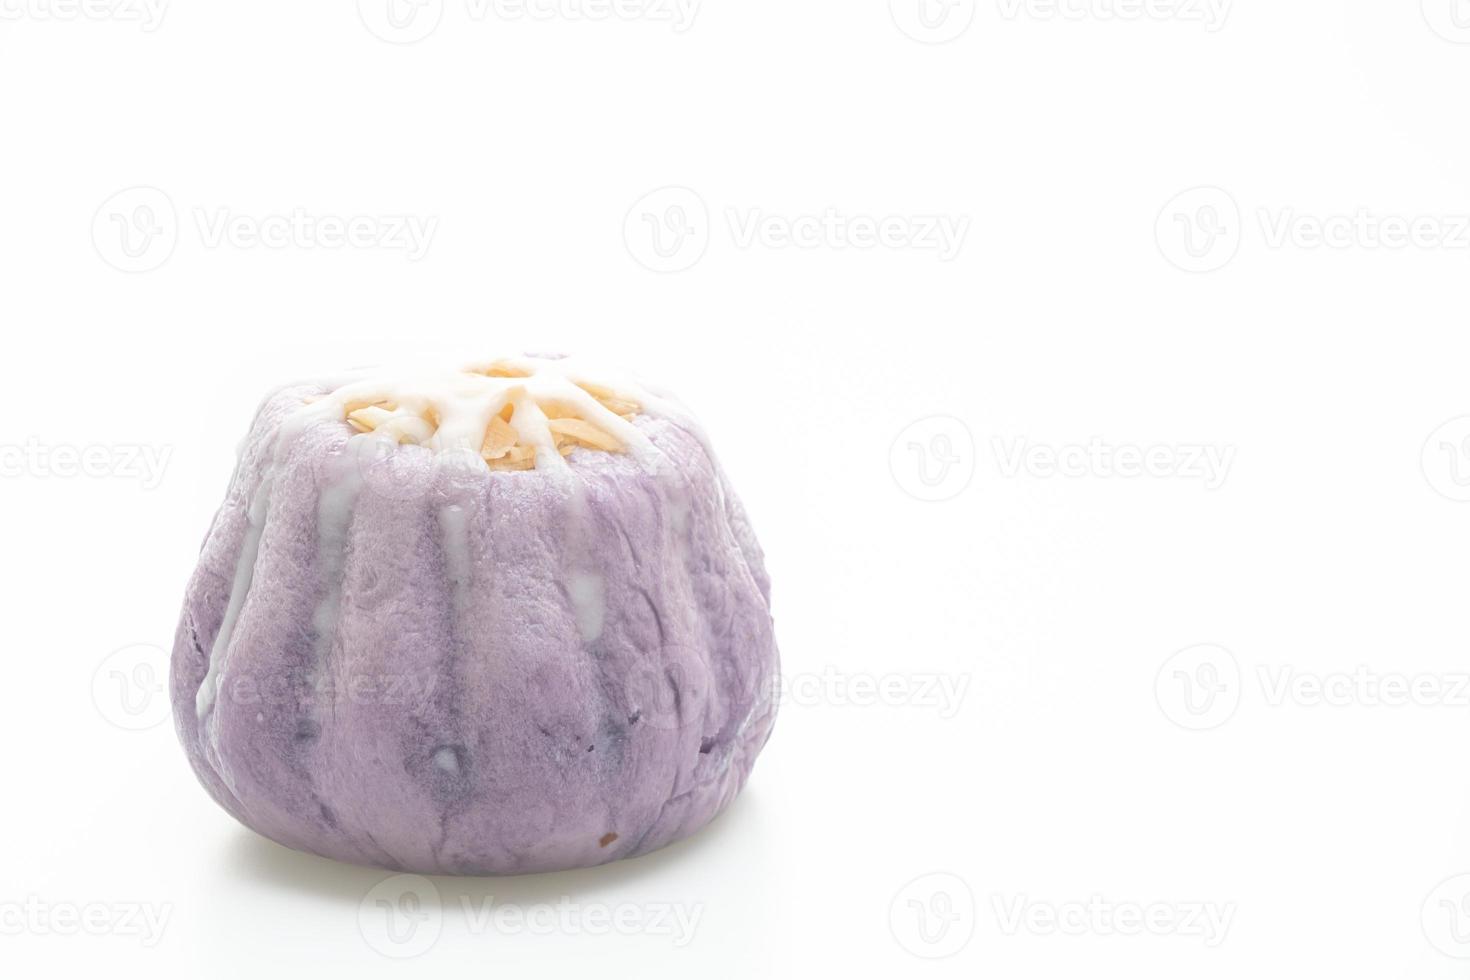 taro bun with white sugar cream and nut on white background photo